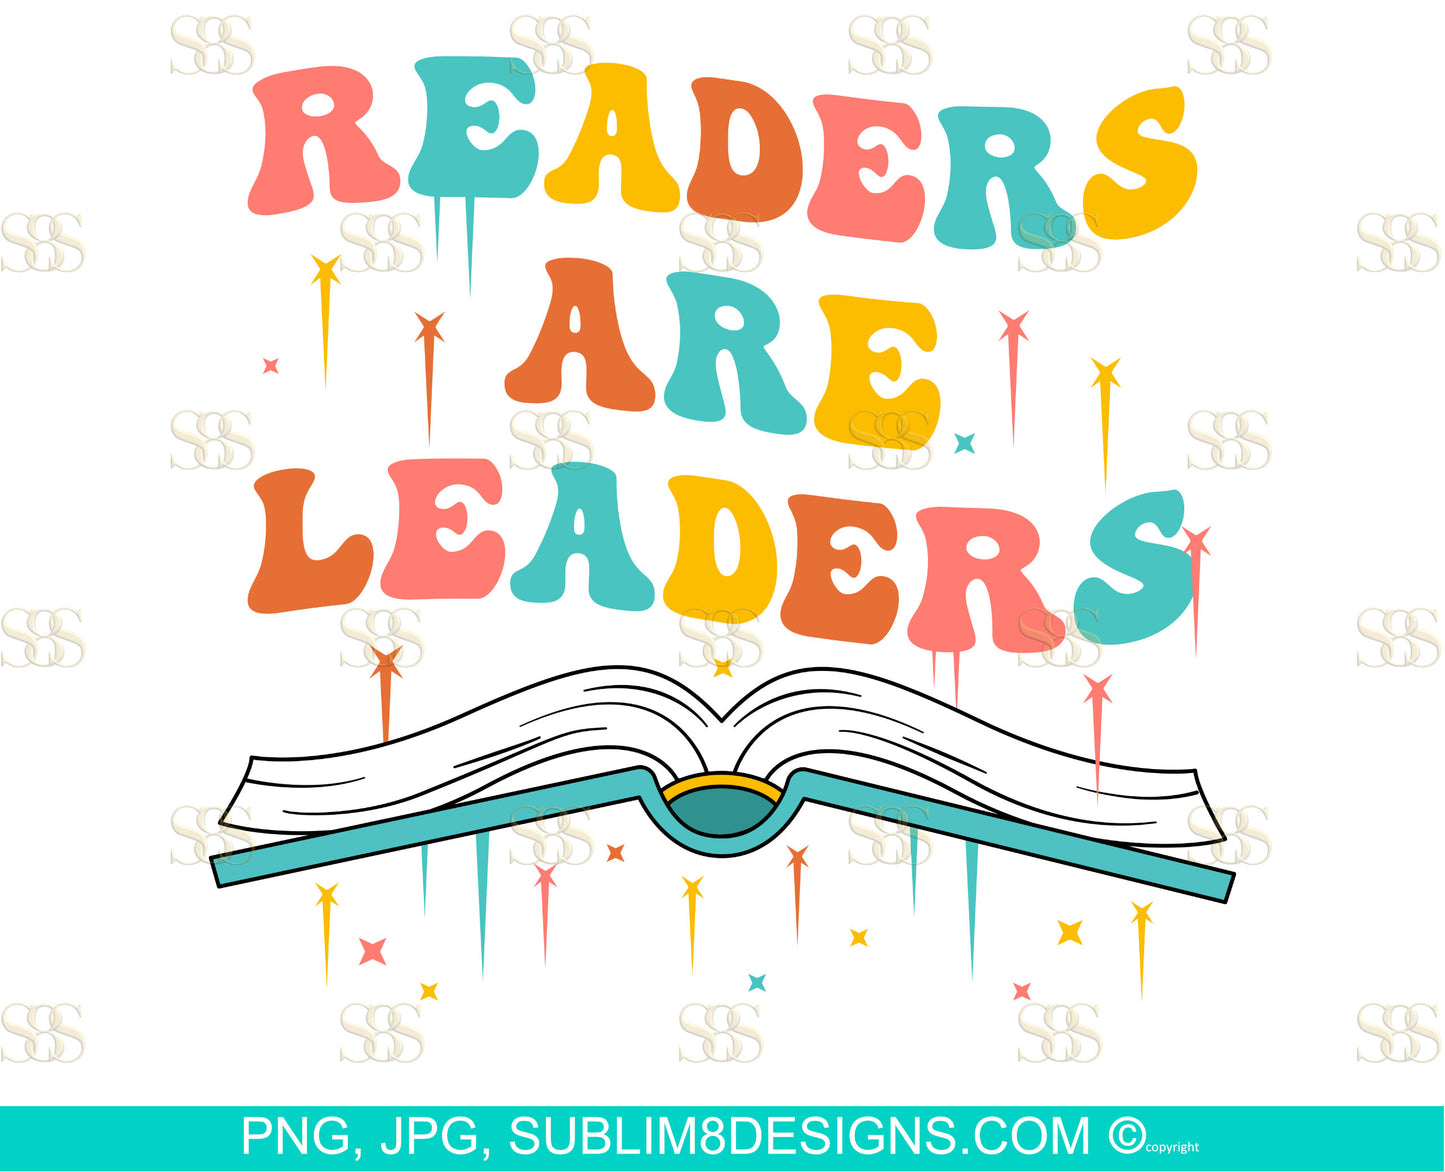 Readers Are Leaders